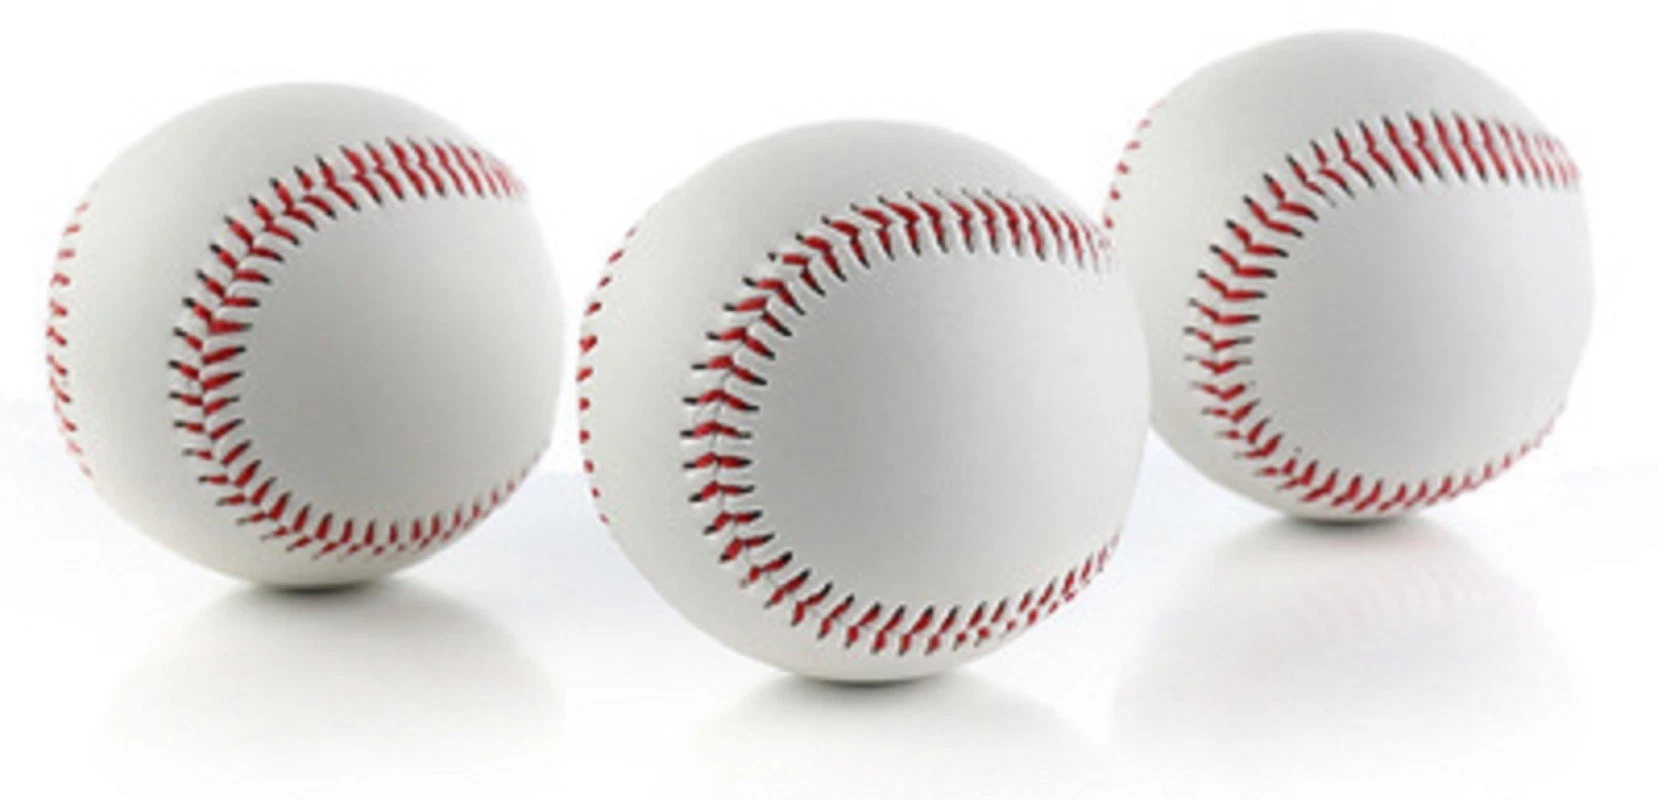 Equipo deportivo pelota de béisbol Hard Ball para la Liga Recreativo Juego, práctica, Entrenamiento Bl16106